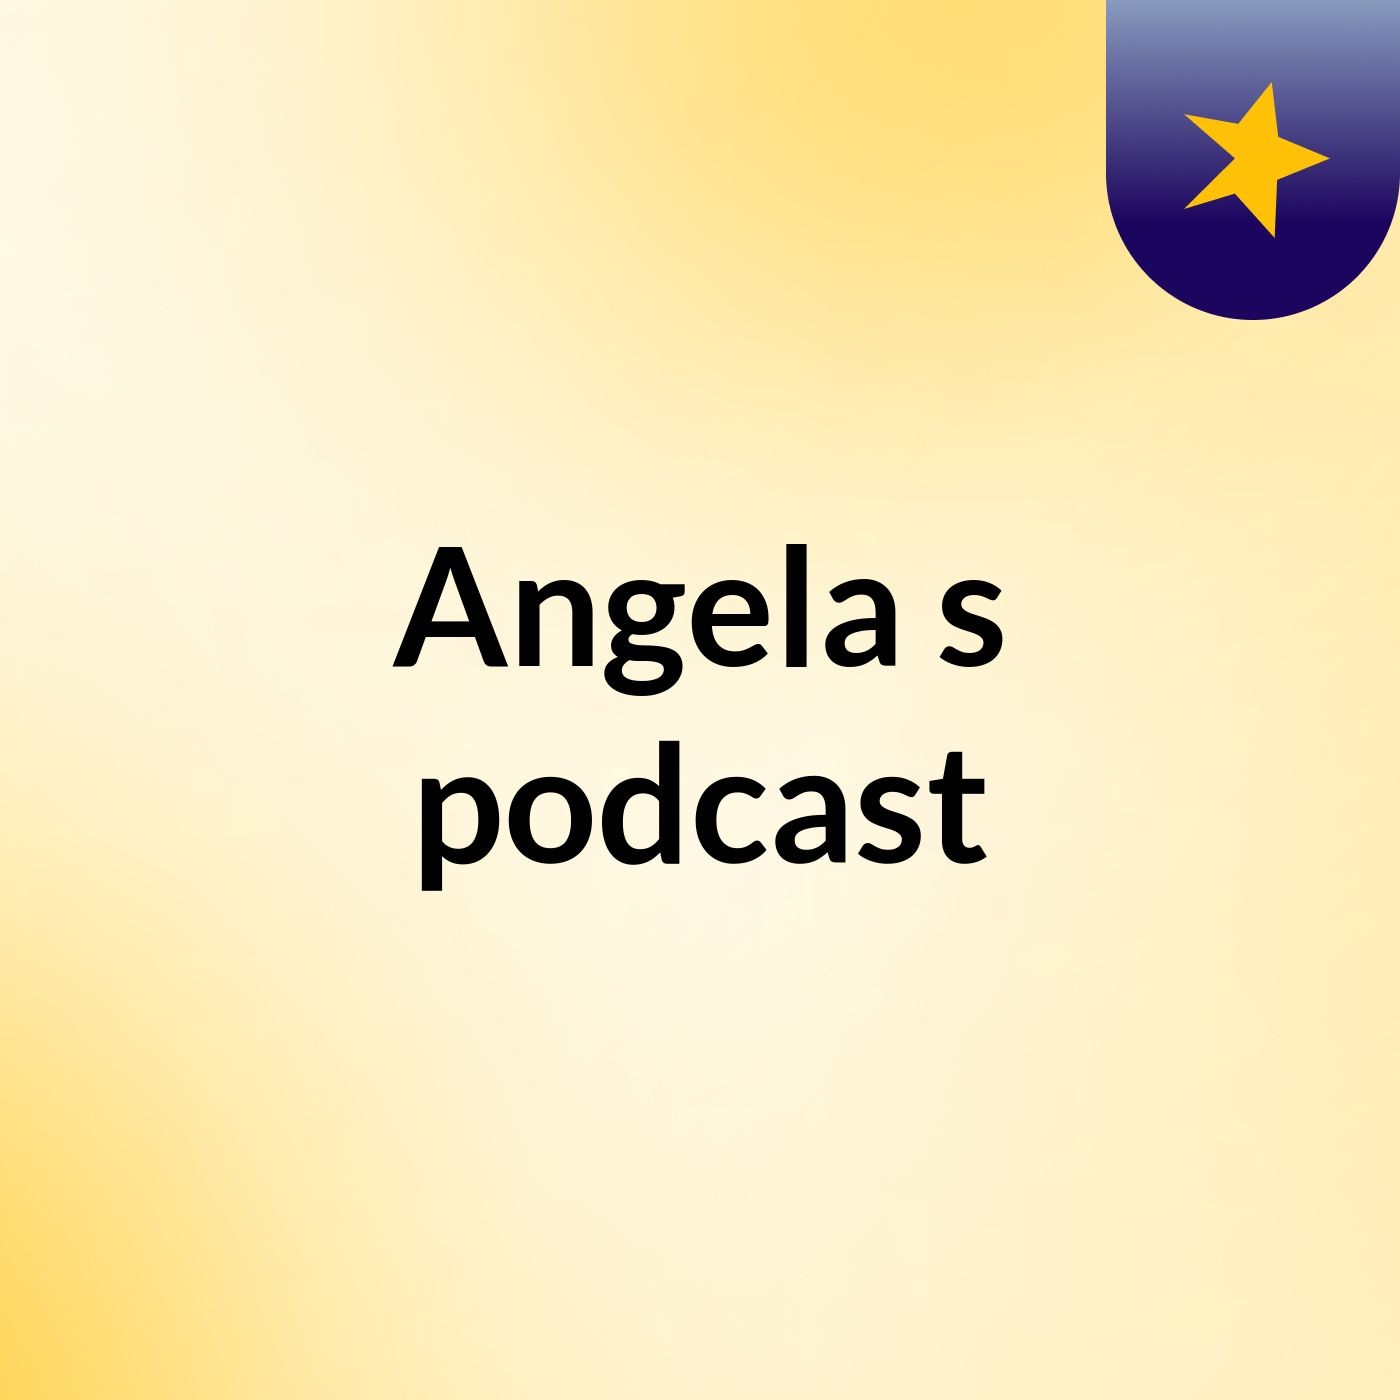 Angela's podcast